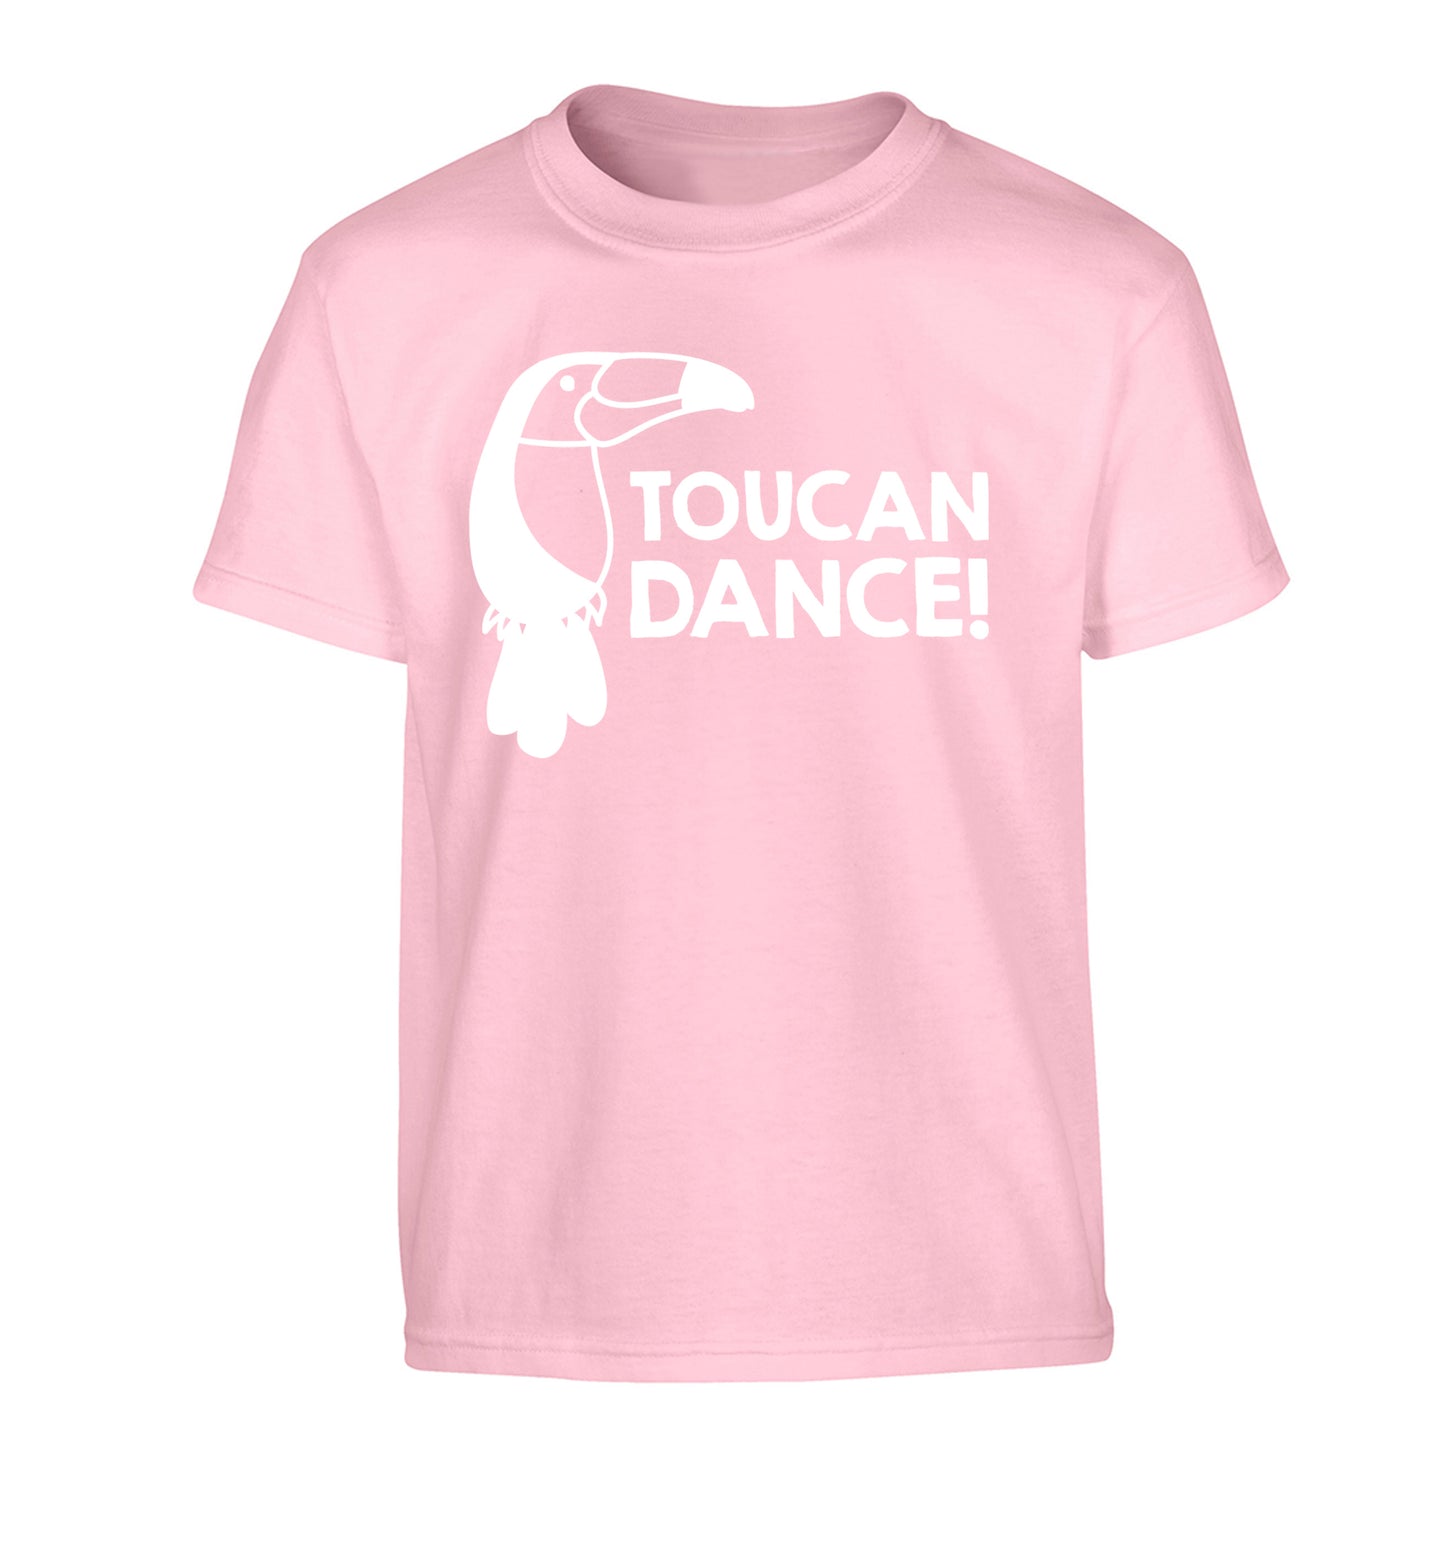 Toucan dance Children's light pink Tshirt 12-13 Years